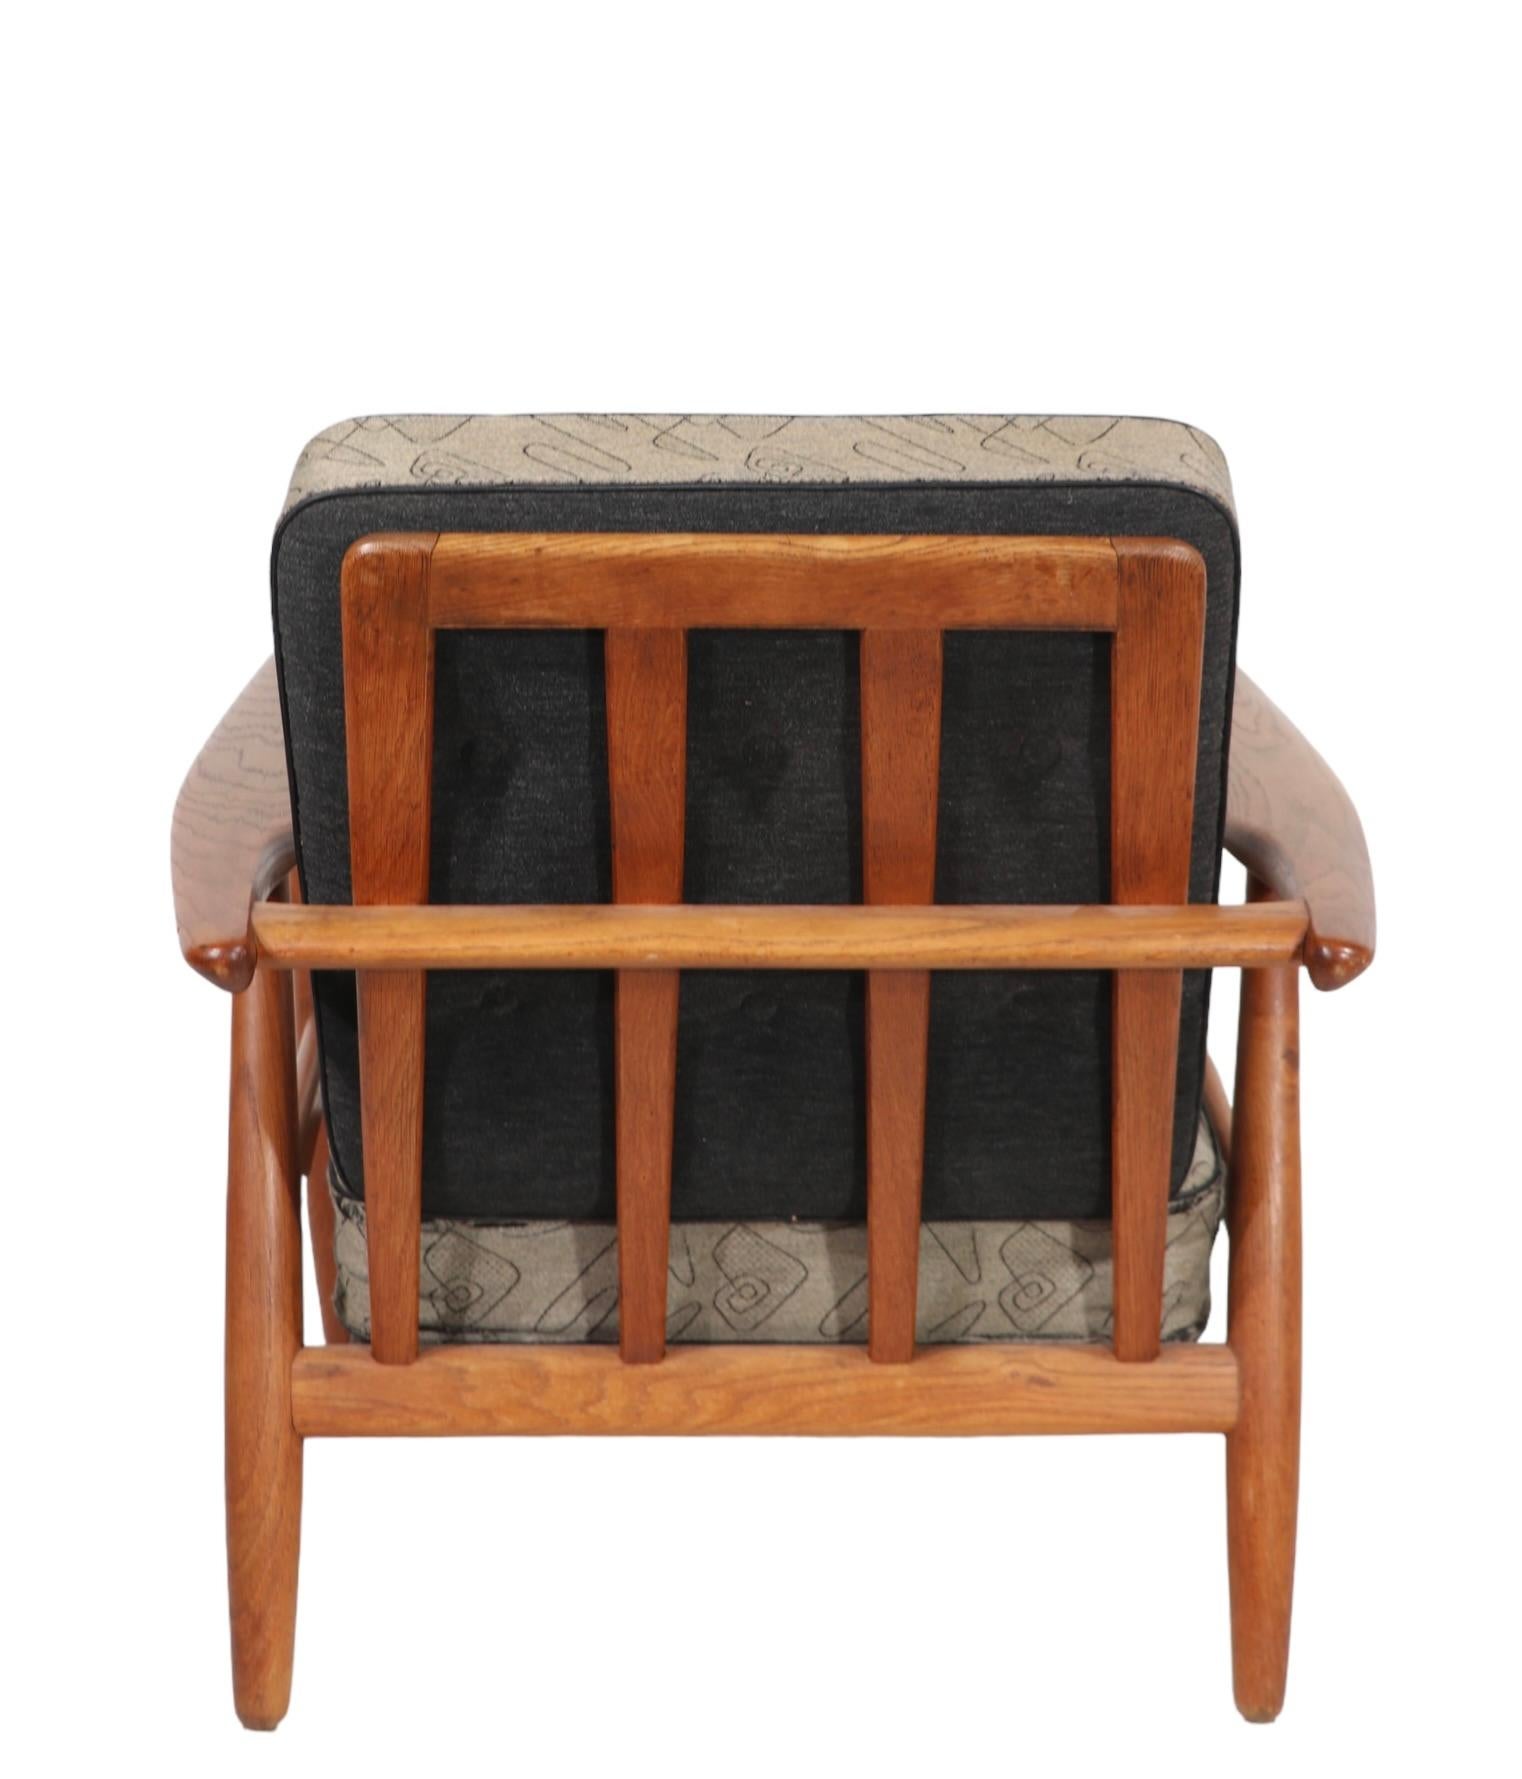 Original Hans Wegner Cigar Chair Made in Denmark for GETAMA c 1950's For Sale 5